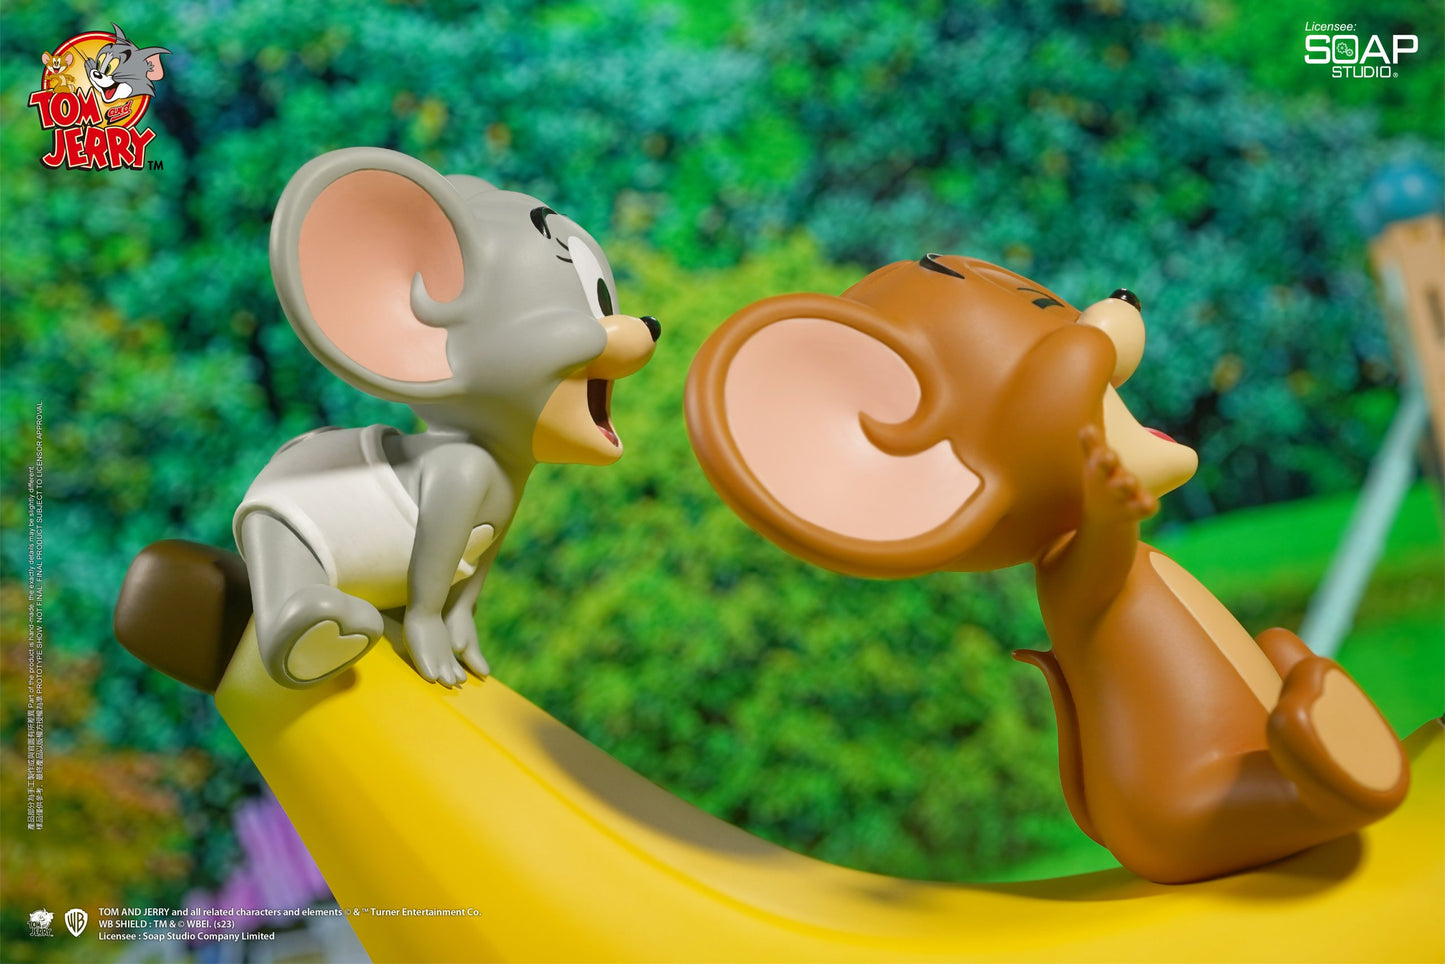 TJ – Jerry and Tuffy Banana Slide Ornament 貓和老鼠 傑瑞與泰菲香蕉滑梯擺件 (此價格不含運費)